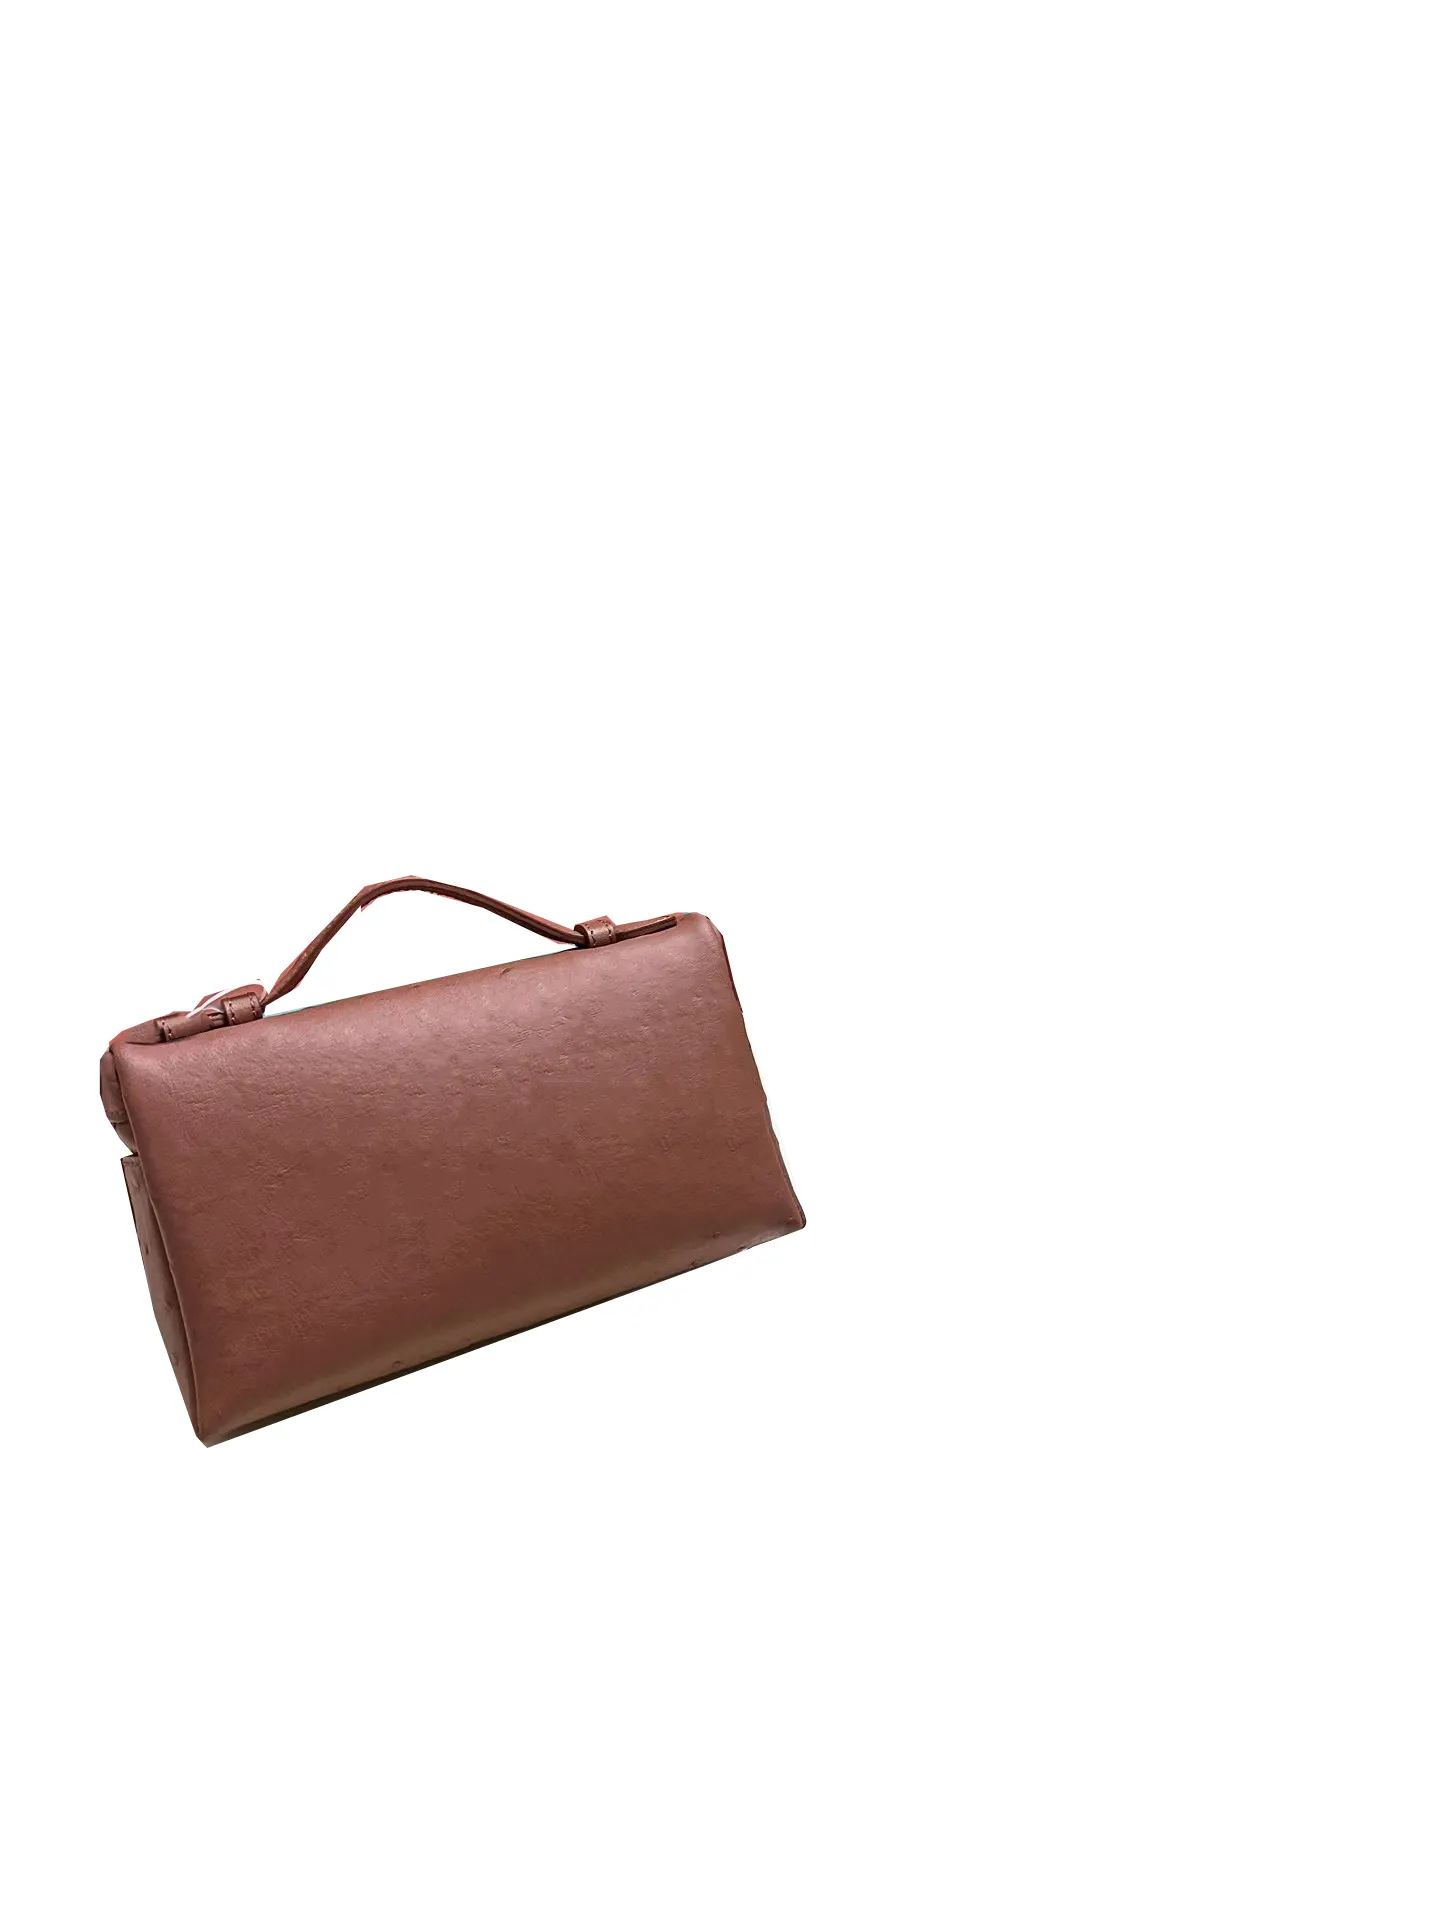 10A حقيبة يد مصممة فاخرة عالية الجودة ، حقيبة كتف مفردة ، سستة سستة مفتوحة حقيبة اليد عبر الجسم